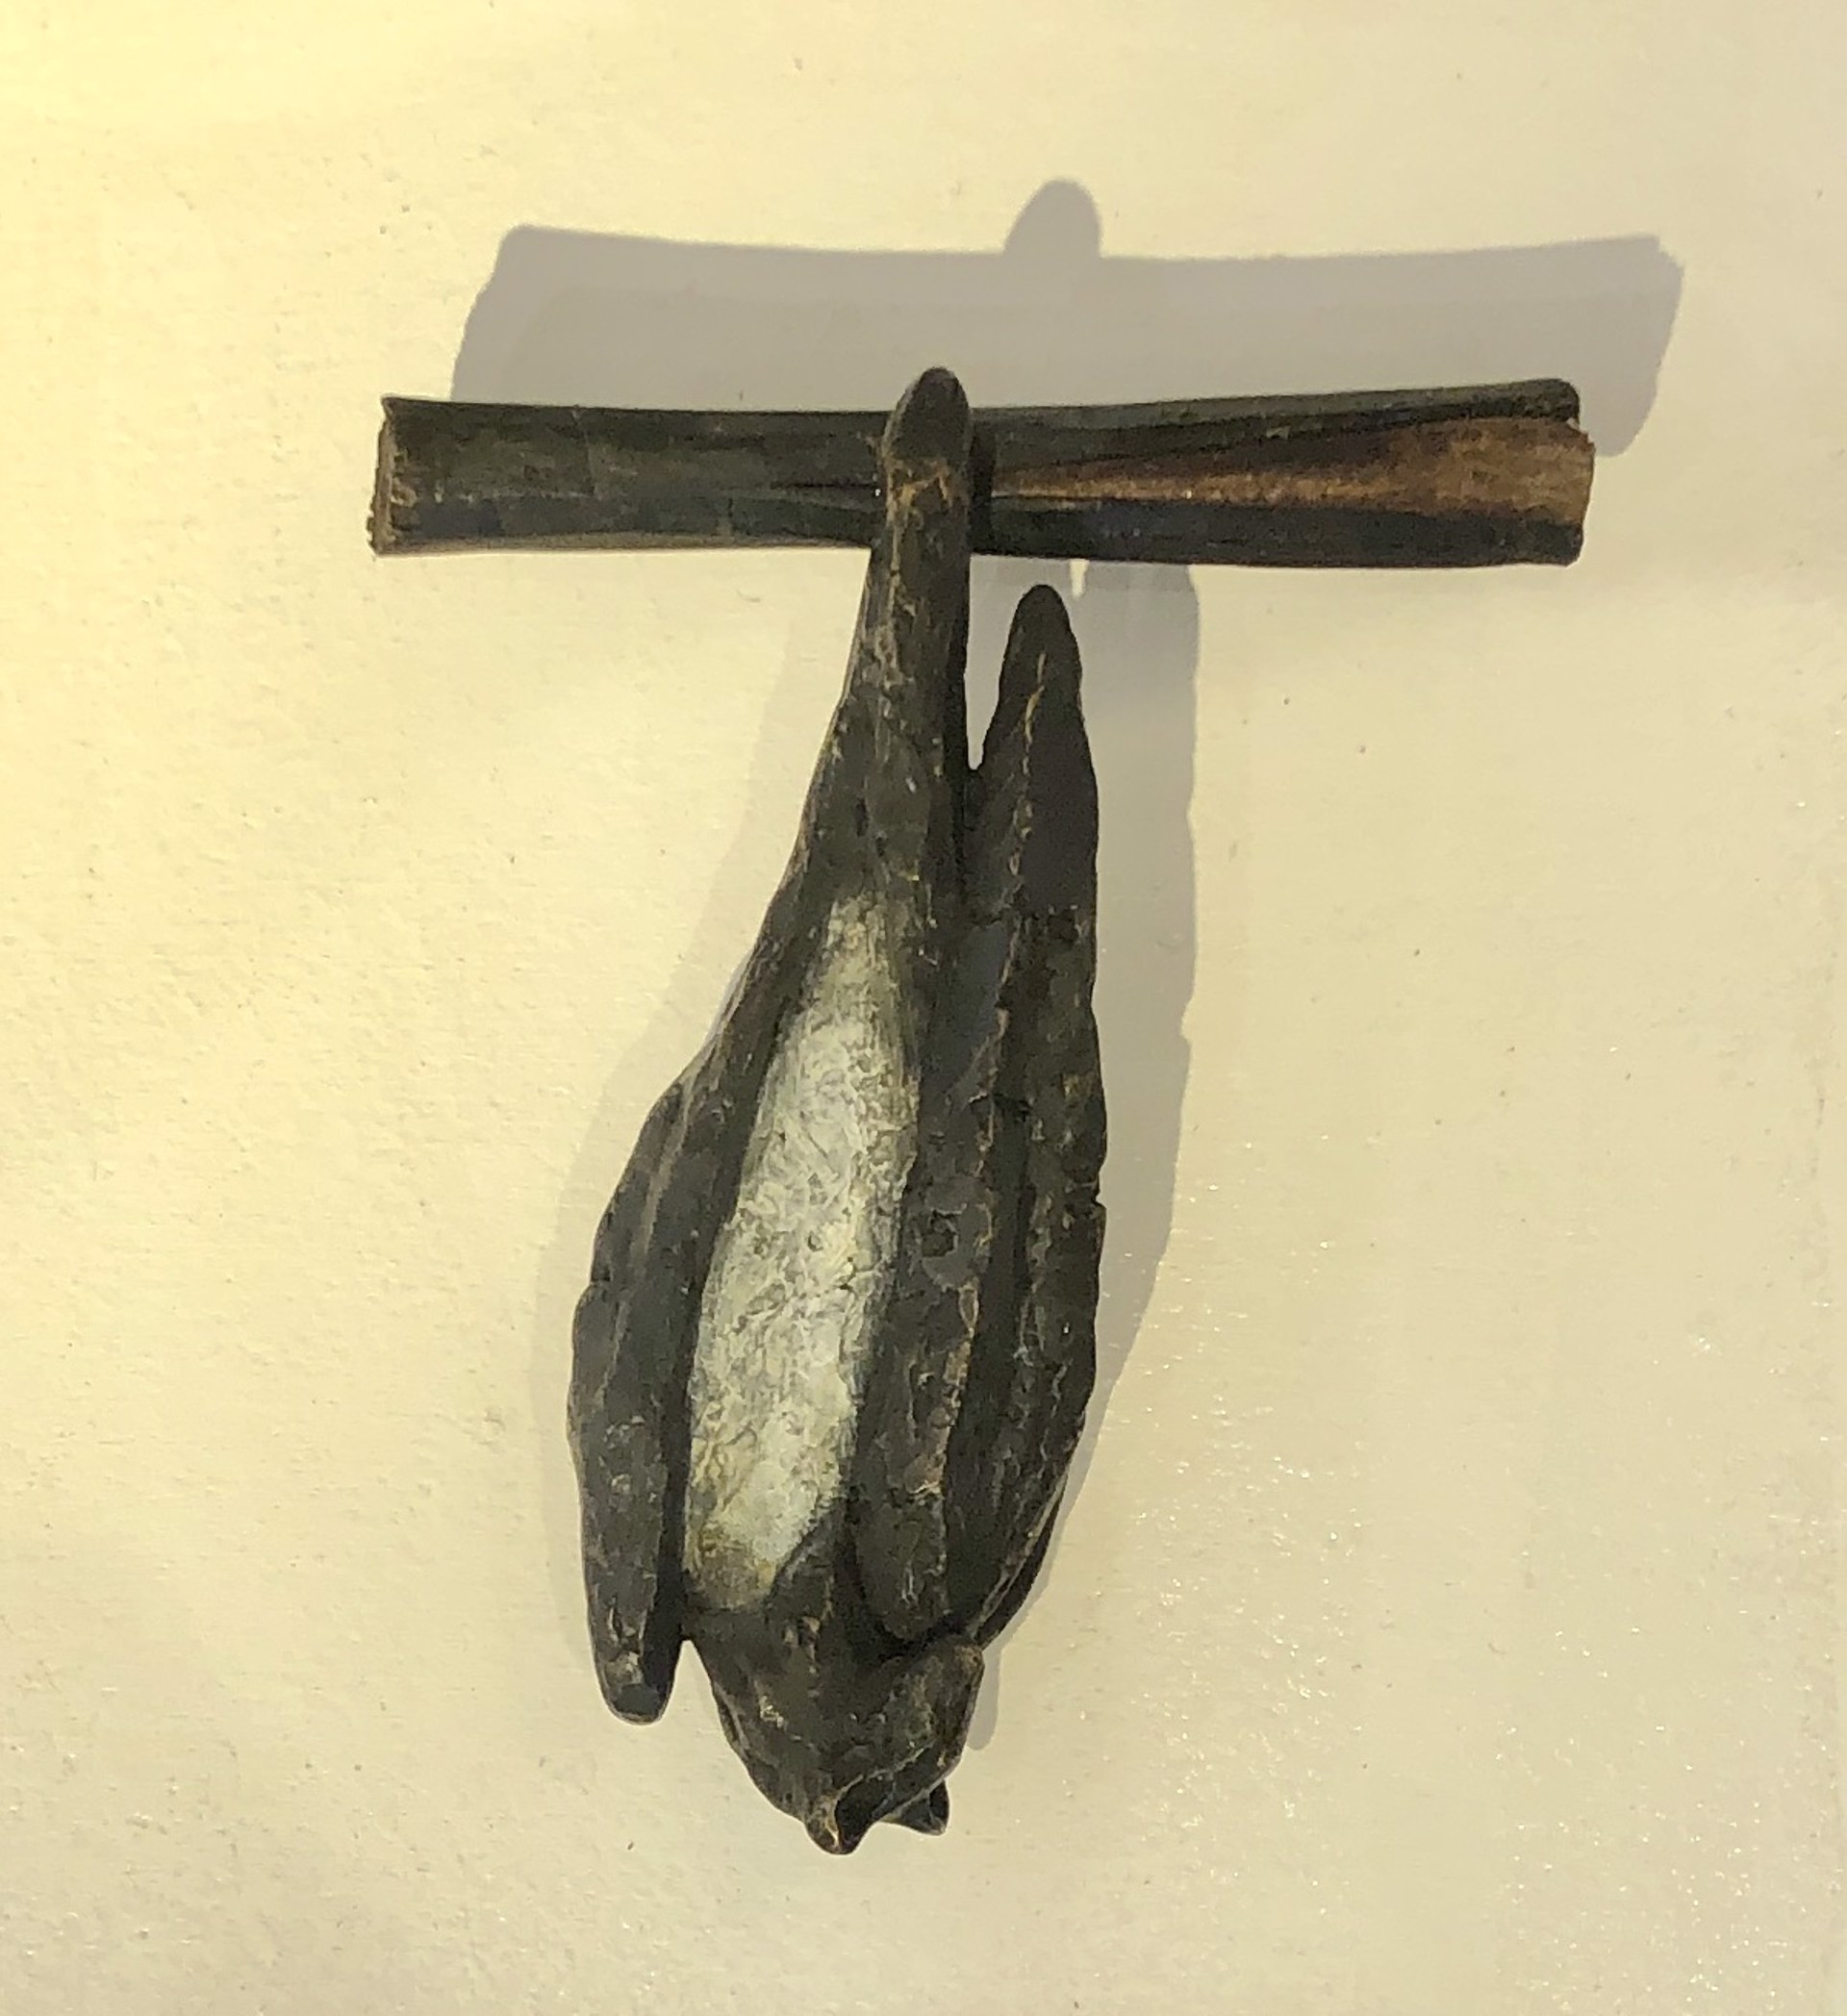 Hanging Bat on Wooden Peg by Copper Tritscheller